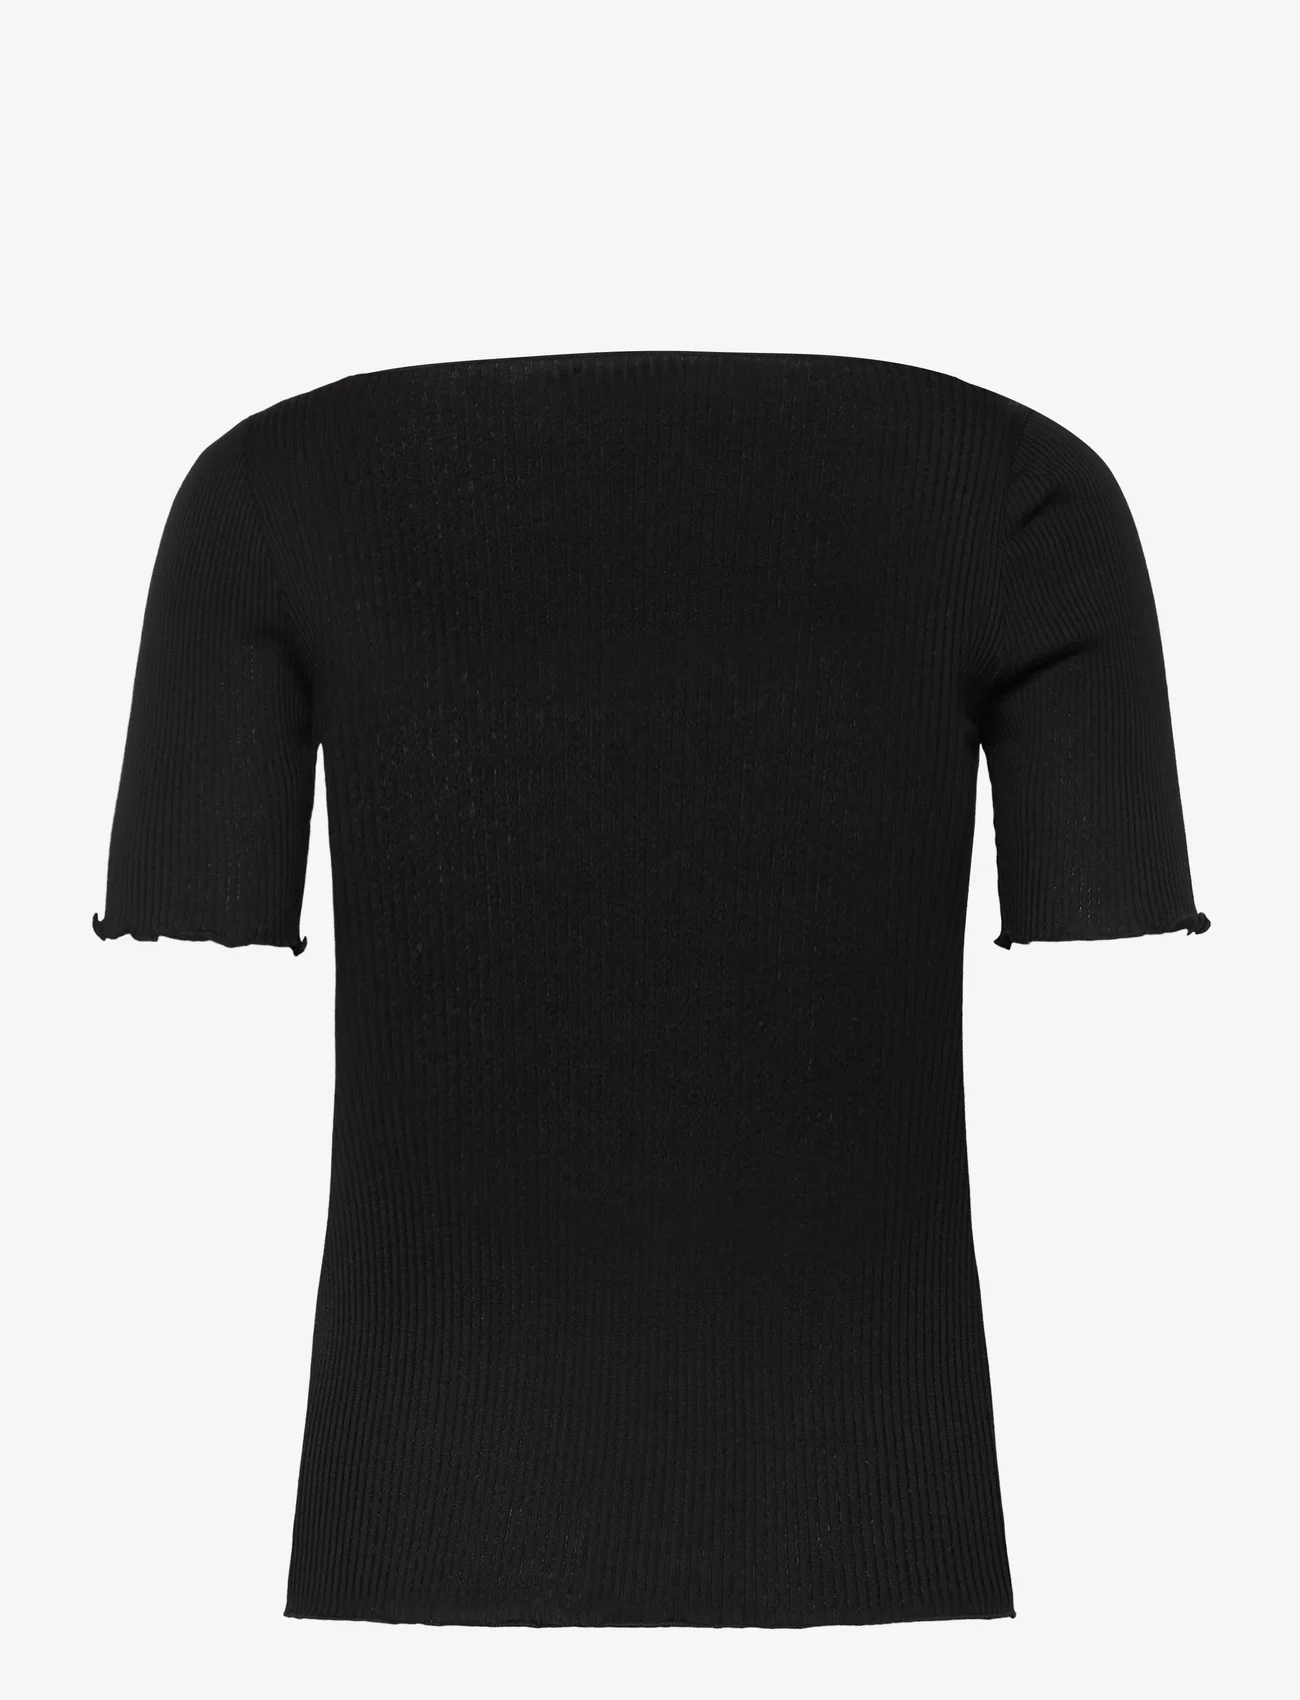 Rosemunde - Silk boat neck t-shirt - t-shirty - black - 1